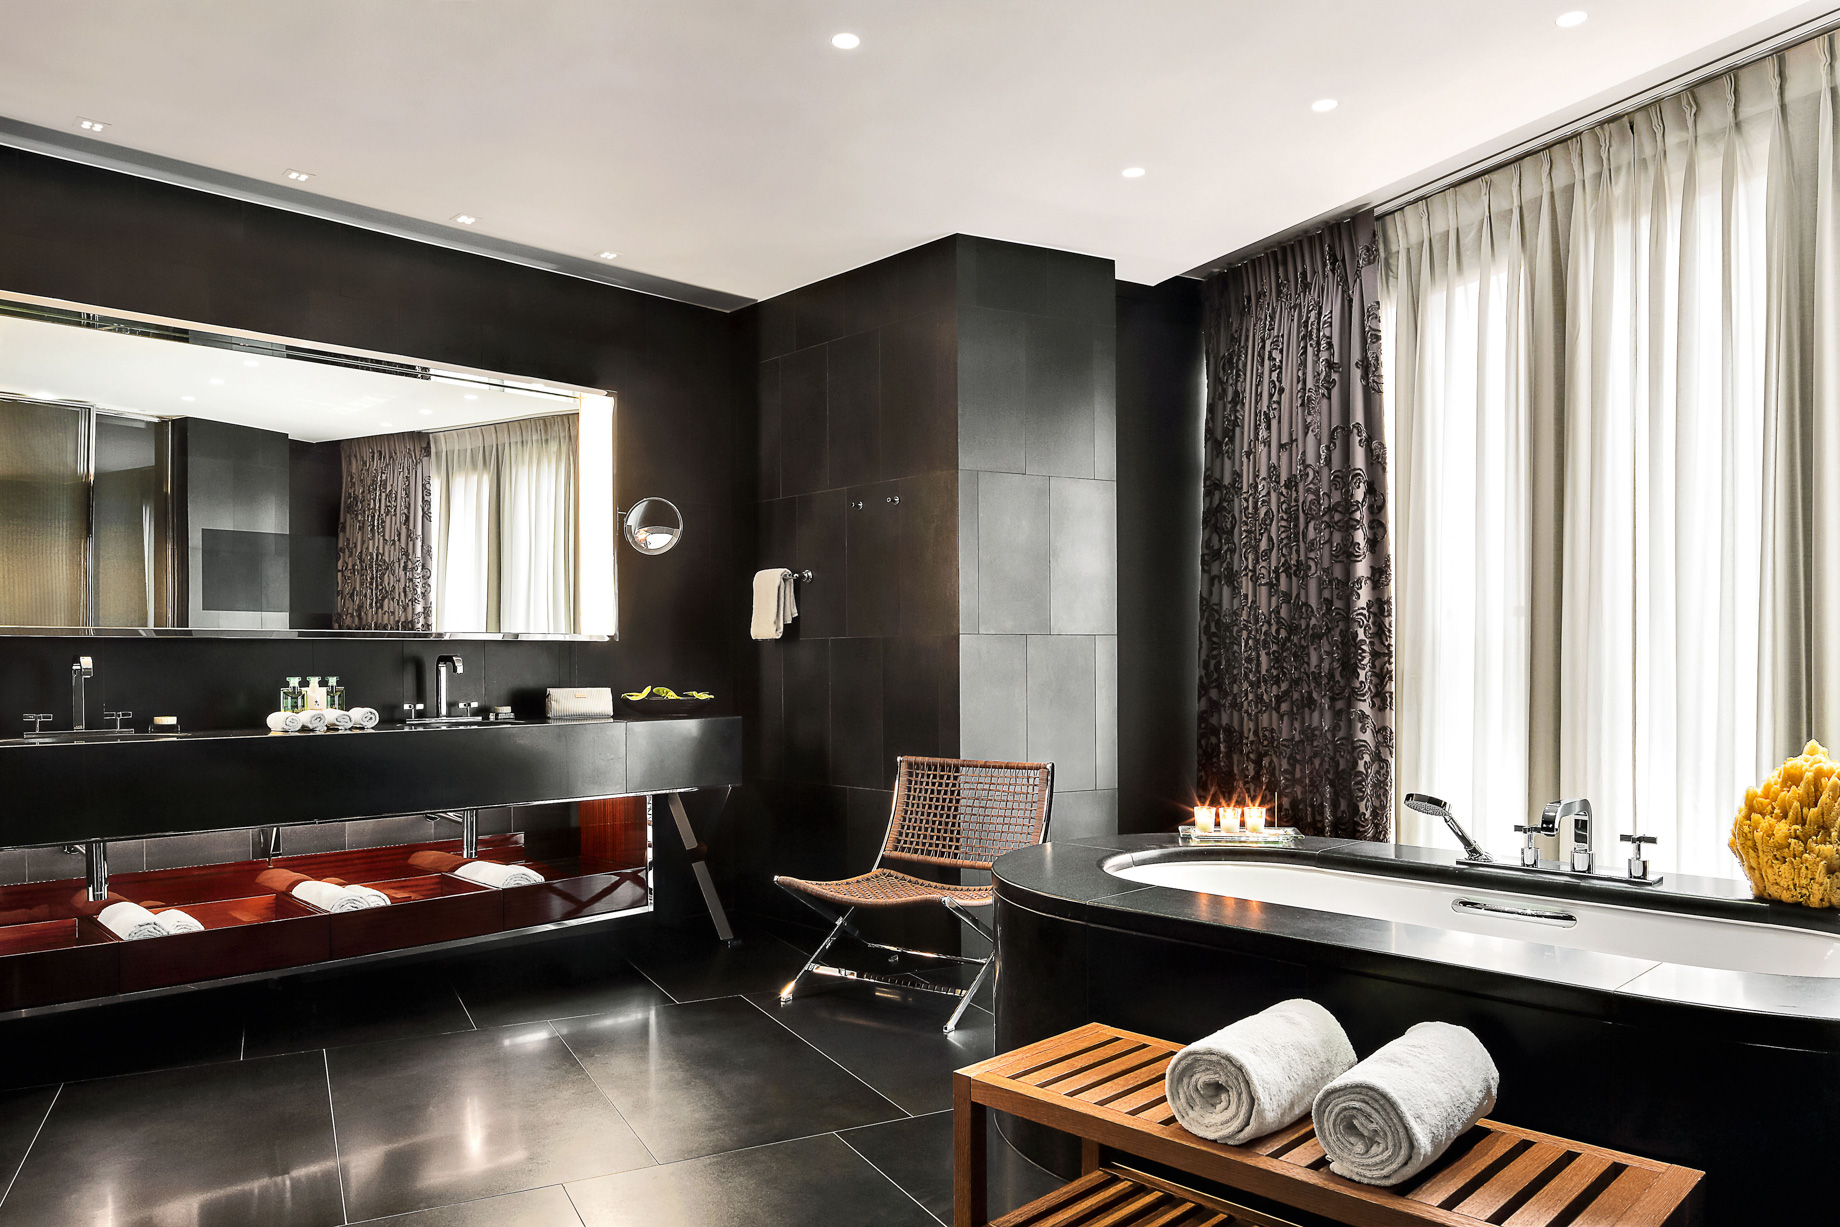 Bvlgari Hotel London – Knightsbridge, London, UK – Bvlgari Suite Bathroom